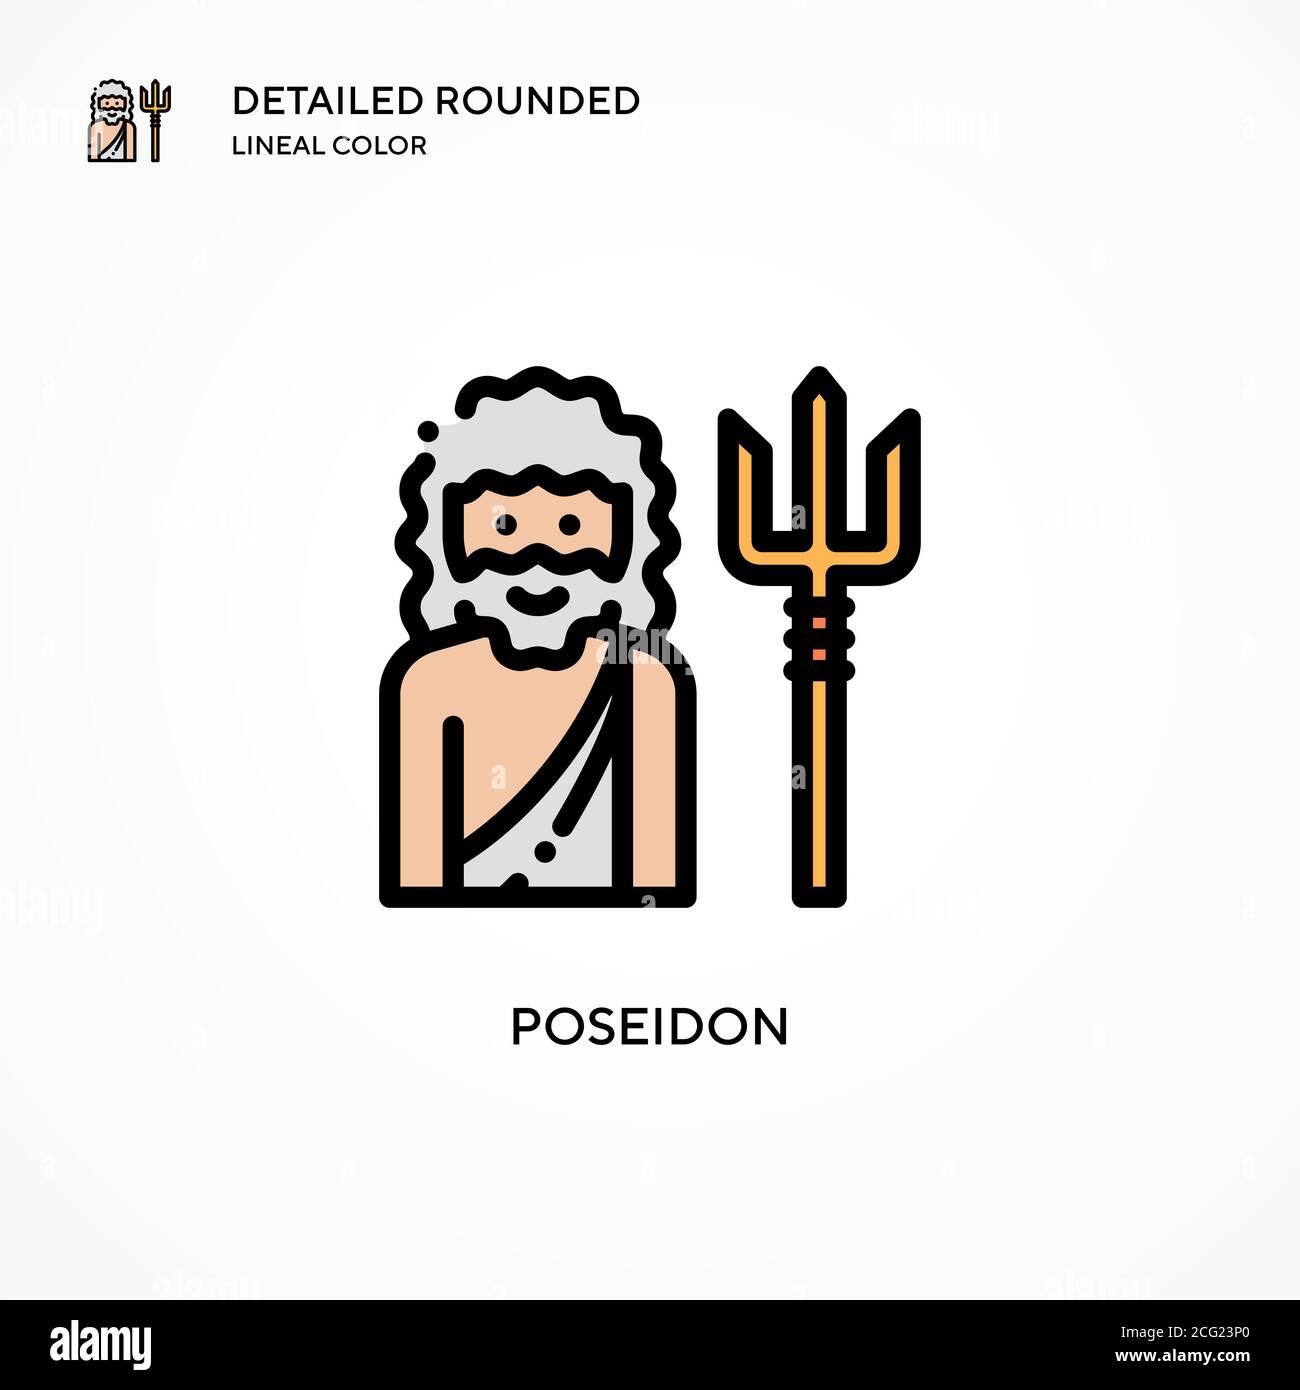 Poseidon vector icon. Modern vector illustration concepts. Easy to edit and customize. Stock Vector